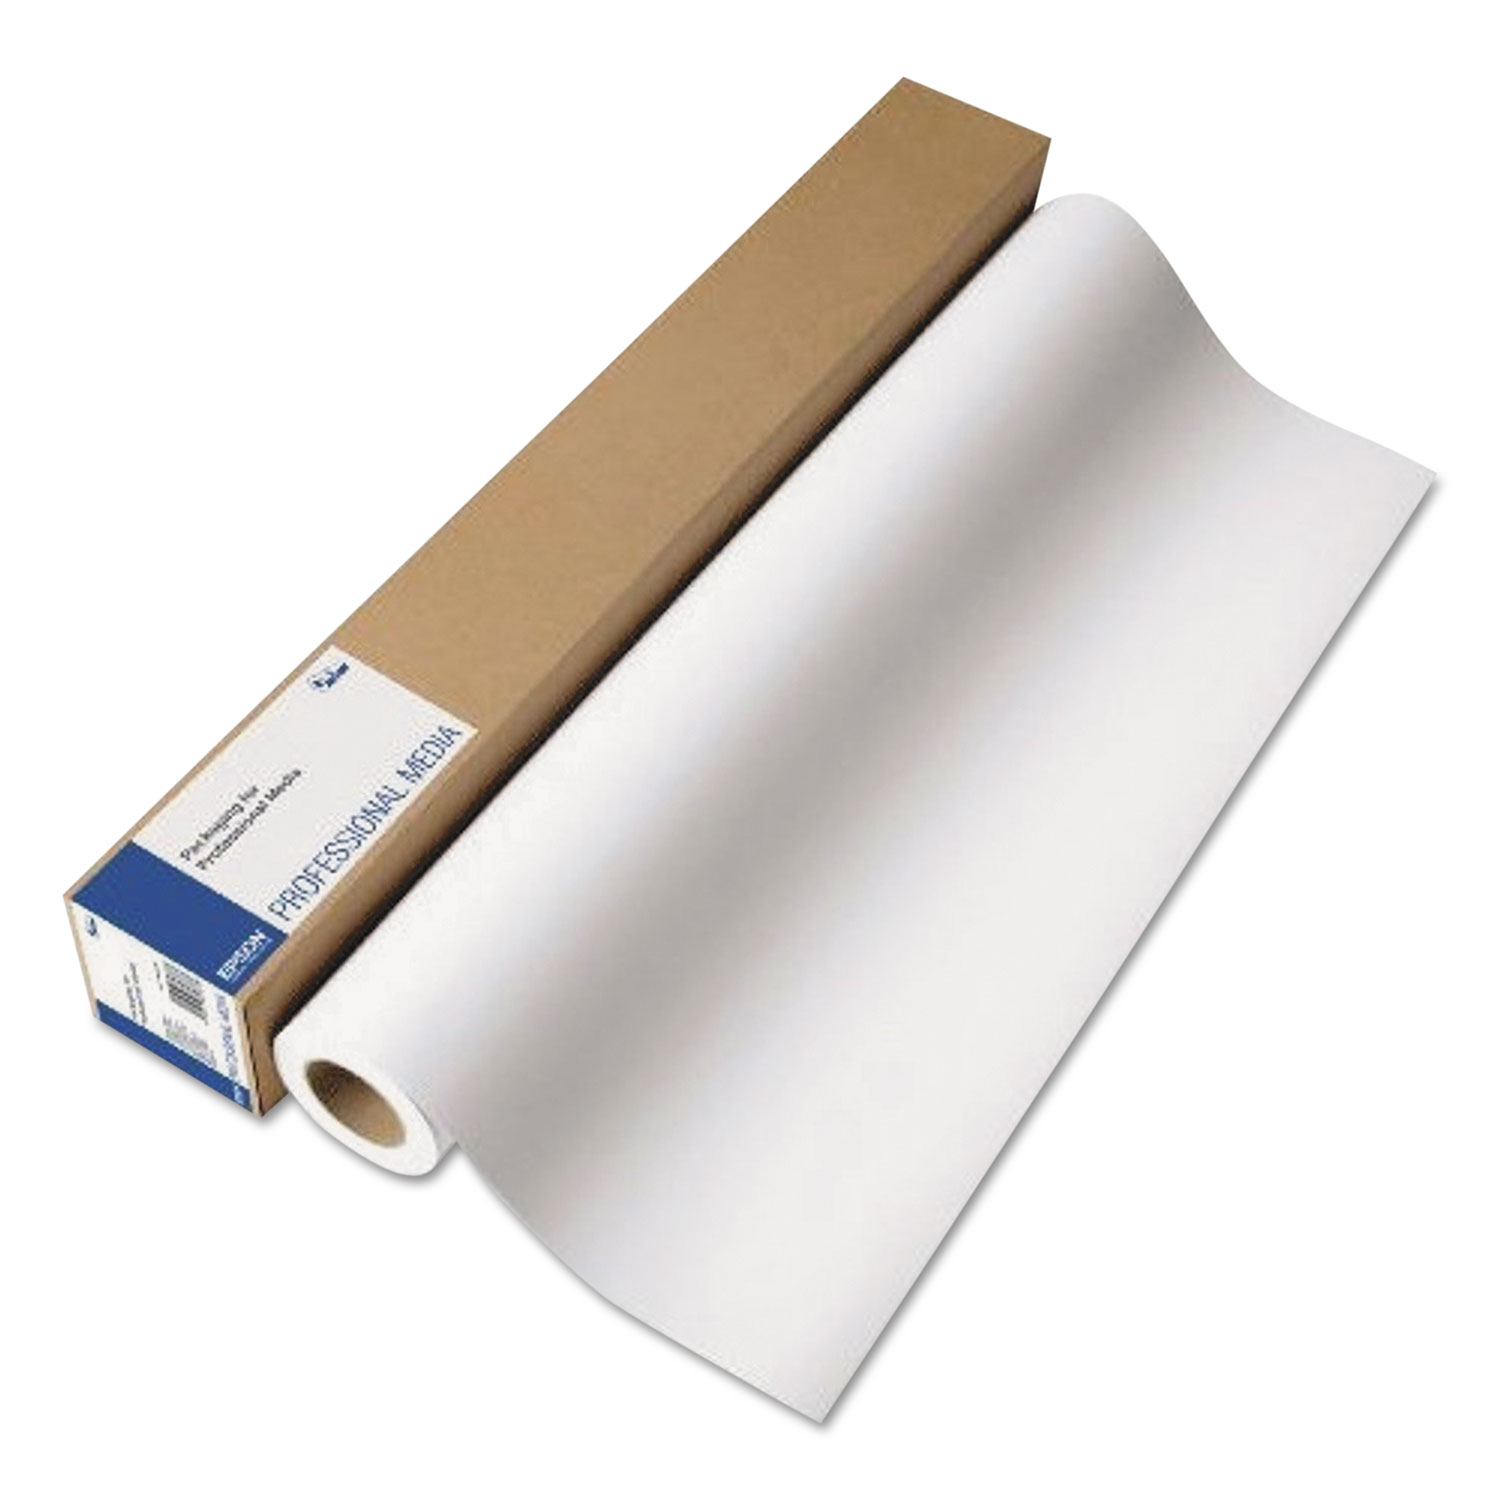  Epson S045585 Professional Media Metallic Photo Paper, 10.5 mil, 16 x 100 ft, Gloss White (EPSS045585) 